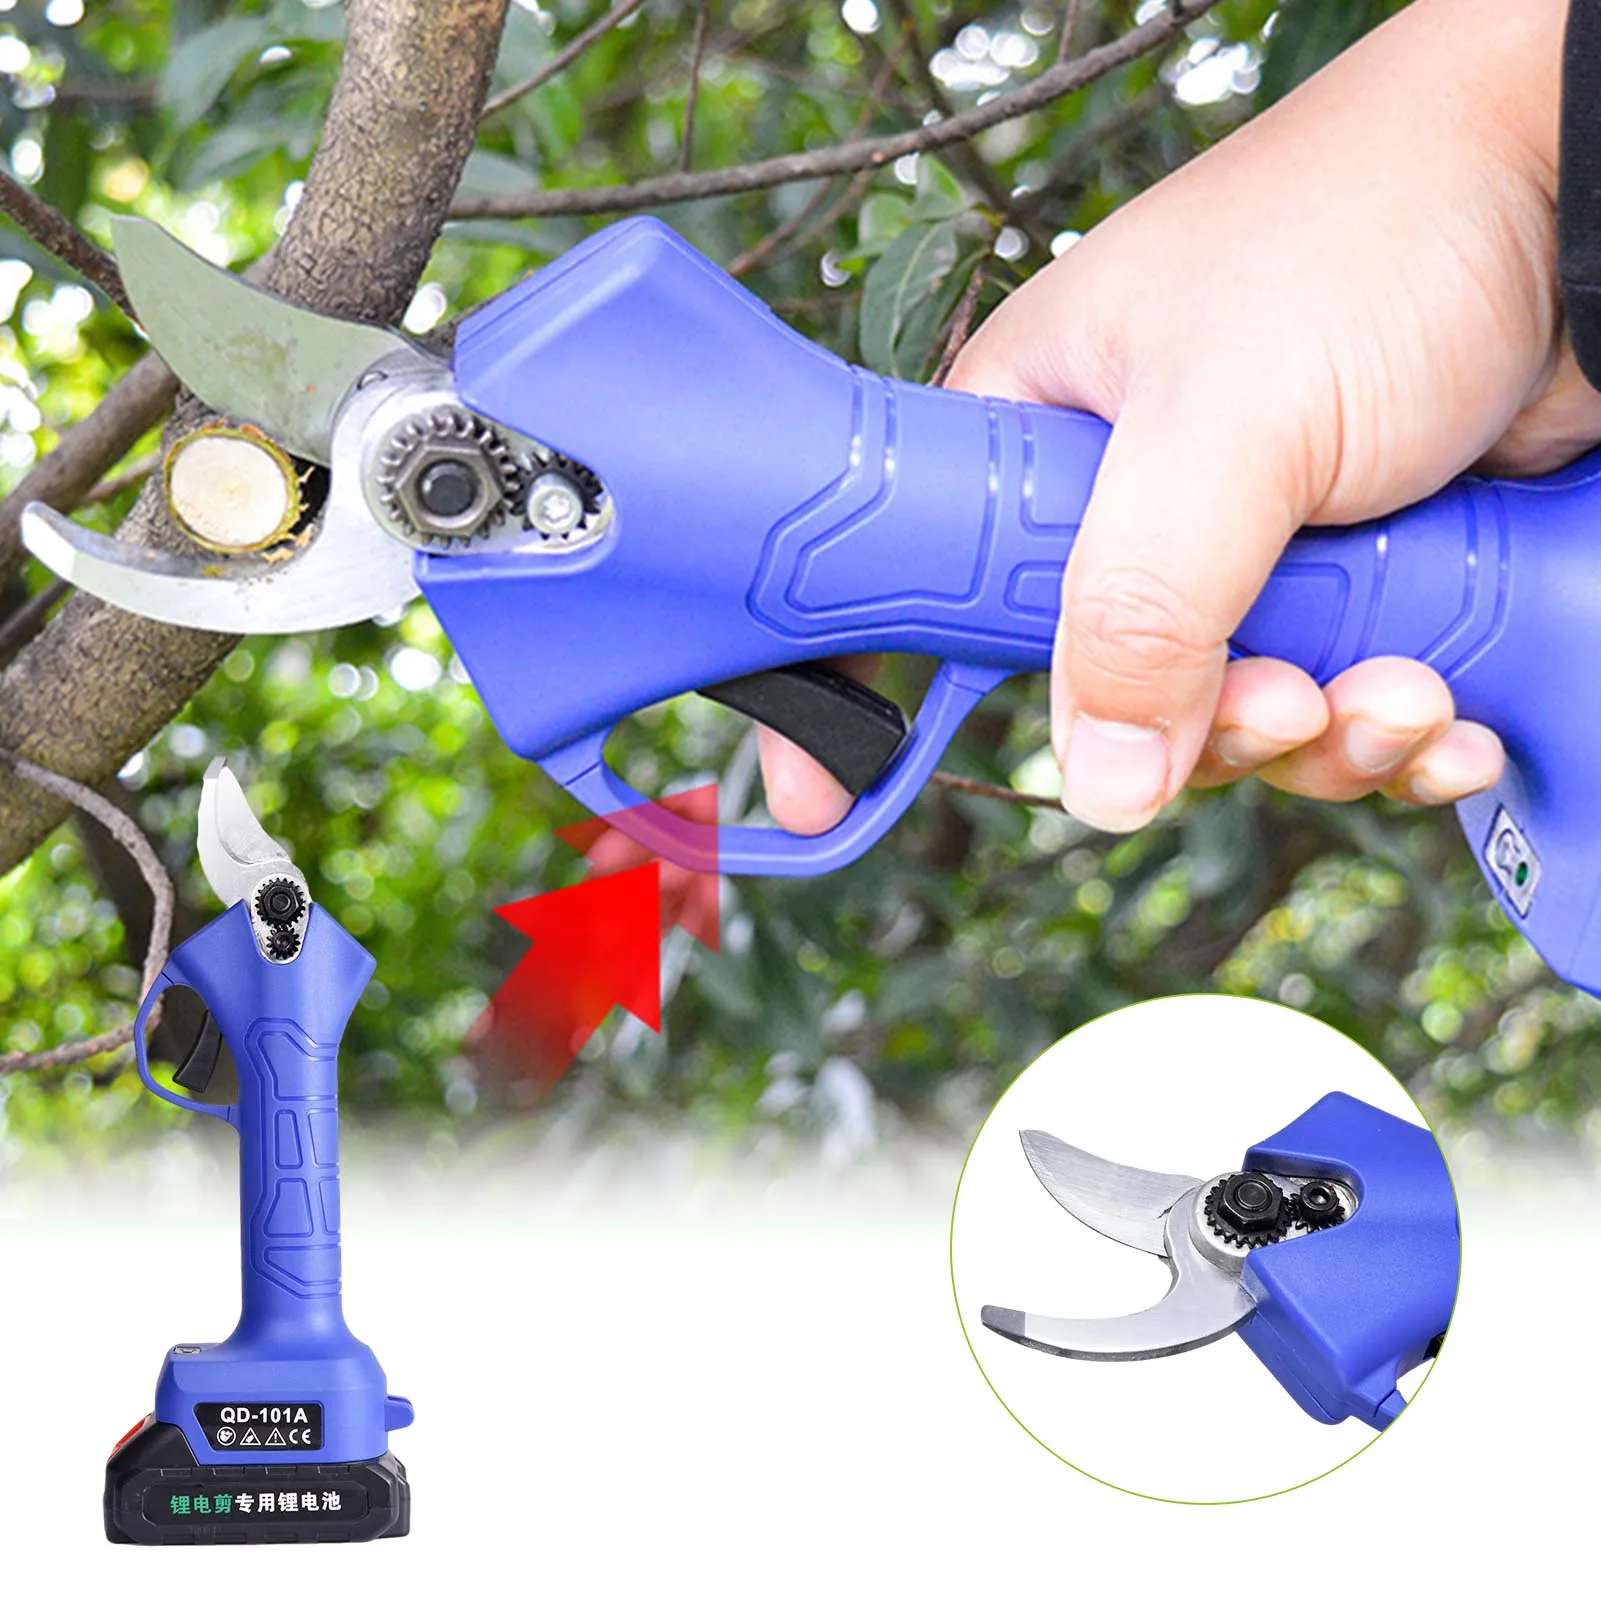 Electric Pruning Shear Cordless Secateurs 2PCS Lithium Battery Pruner Fruit Tree Branch Trimmer Cutter Scissor Garden Power Tool